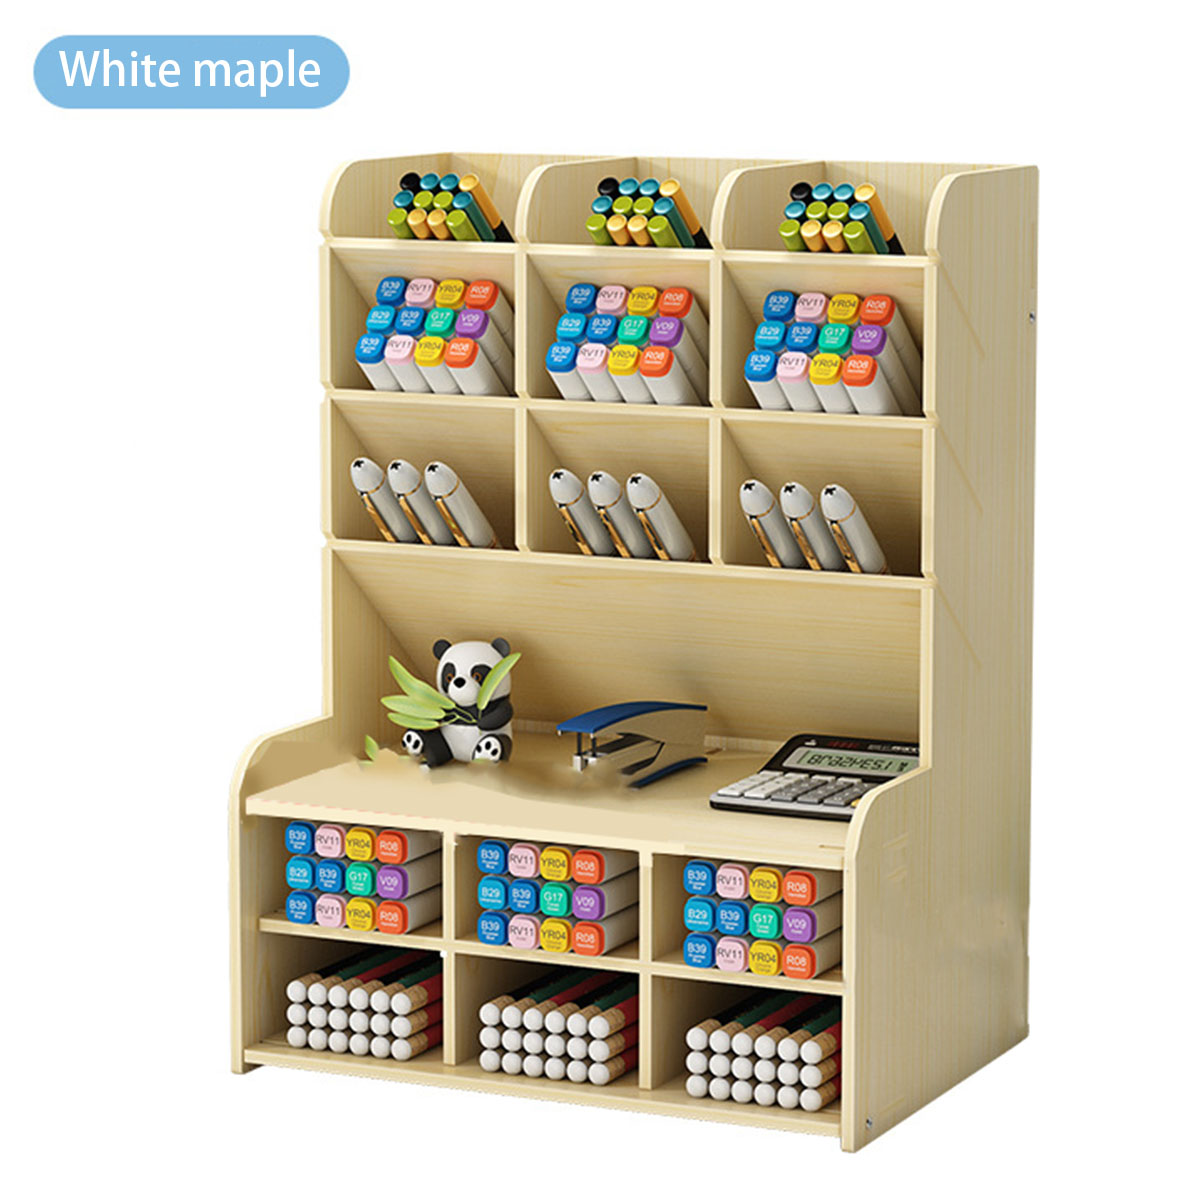 Wooden-Pencil-Pen-Storage-Box-Tilting-Desktop-Stationary-Holder-Organizer-Home-Office-Supplies-Stora-1745793-13